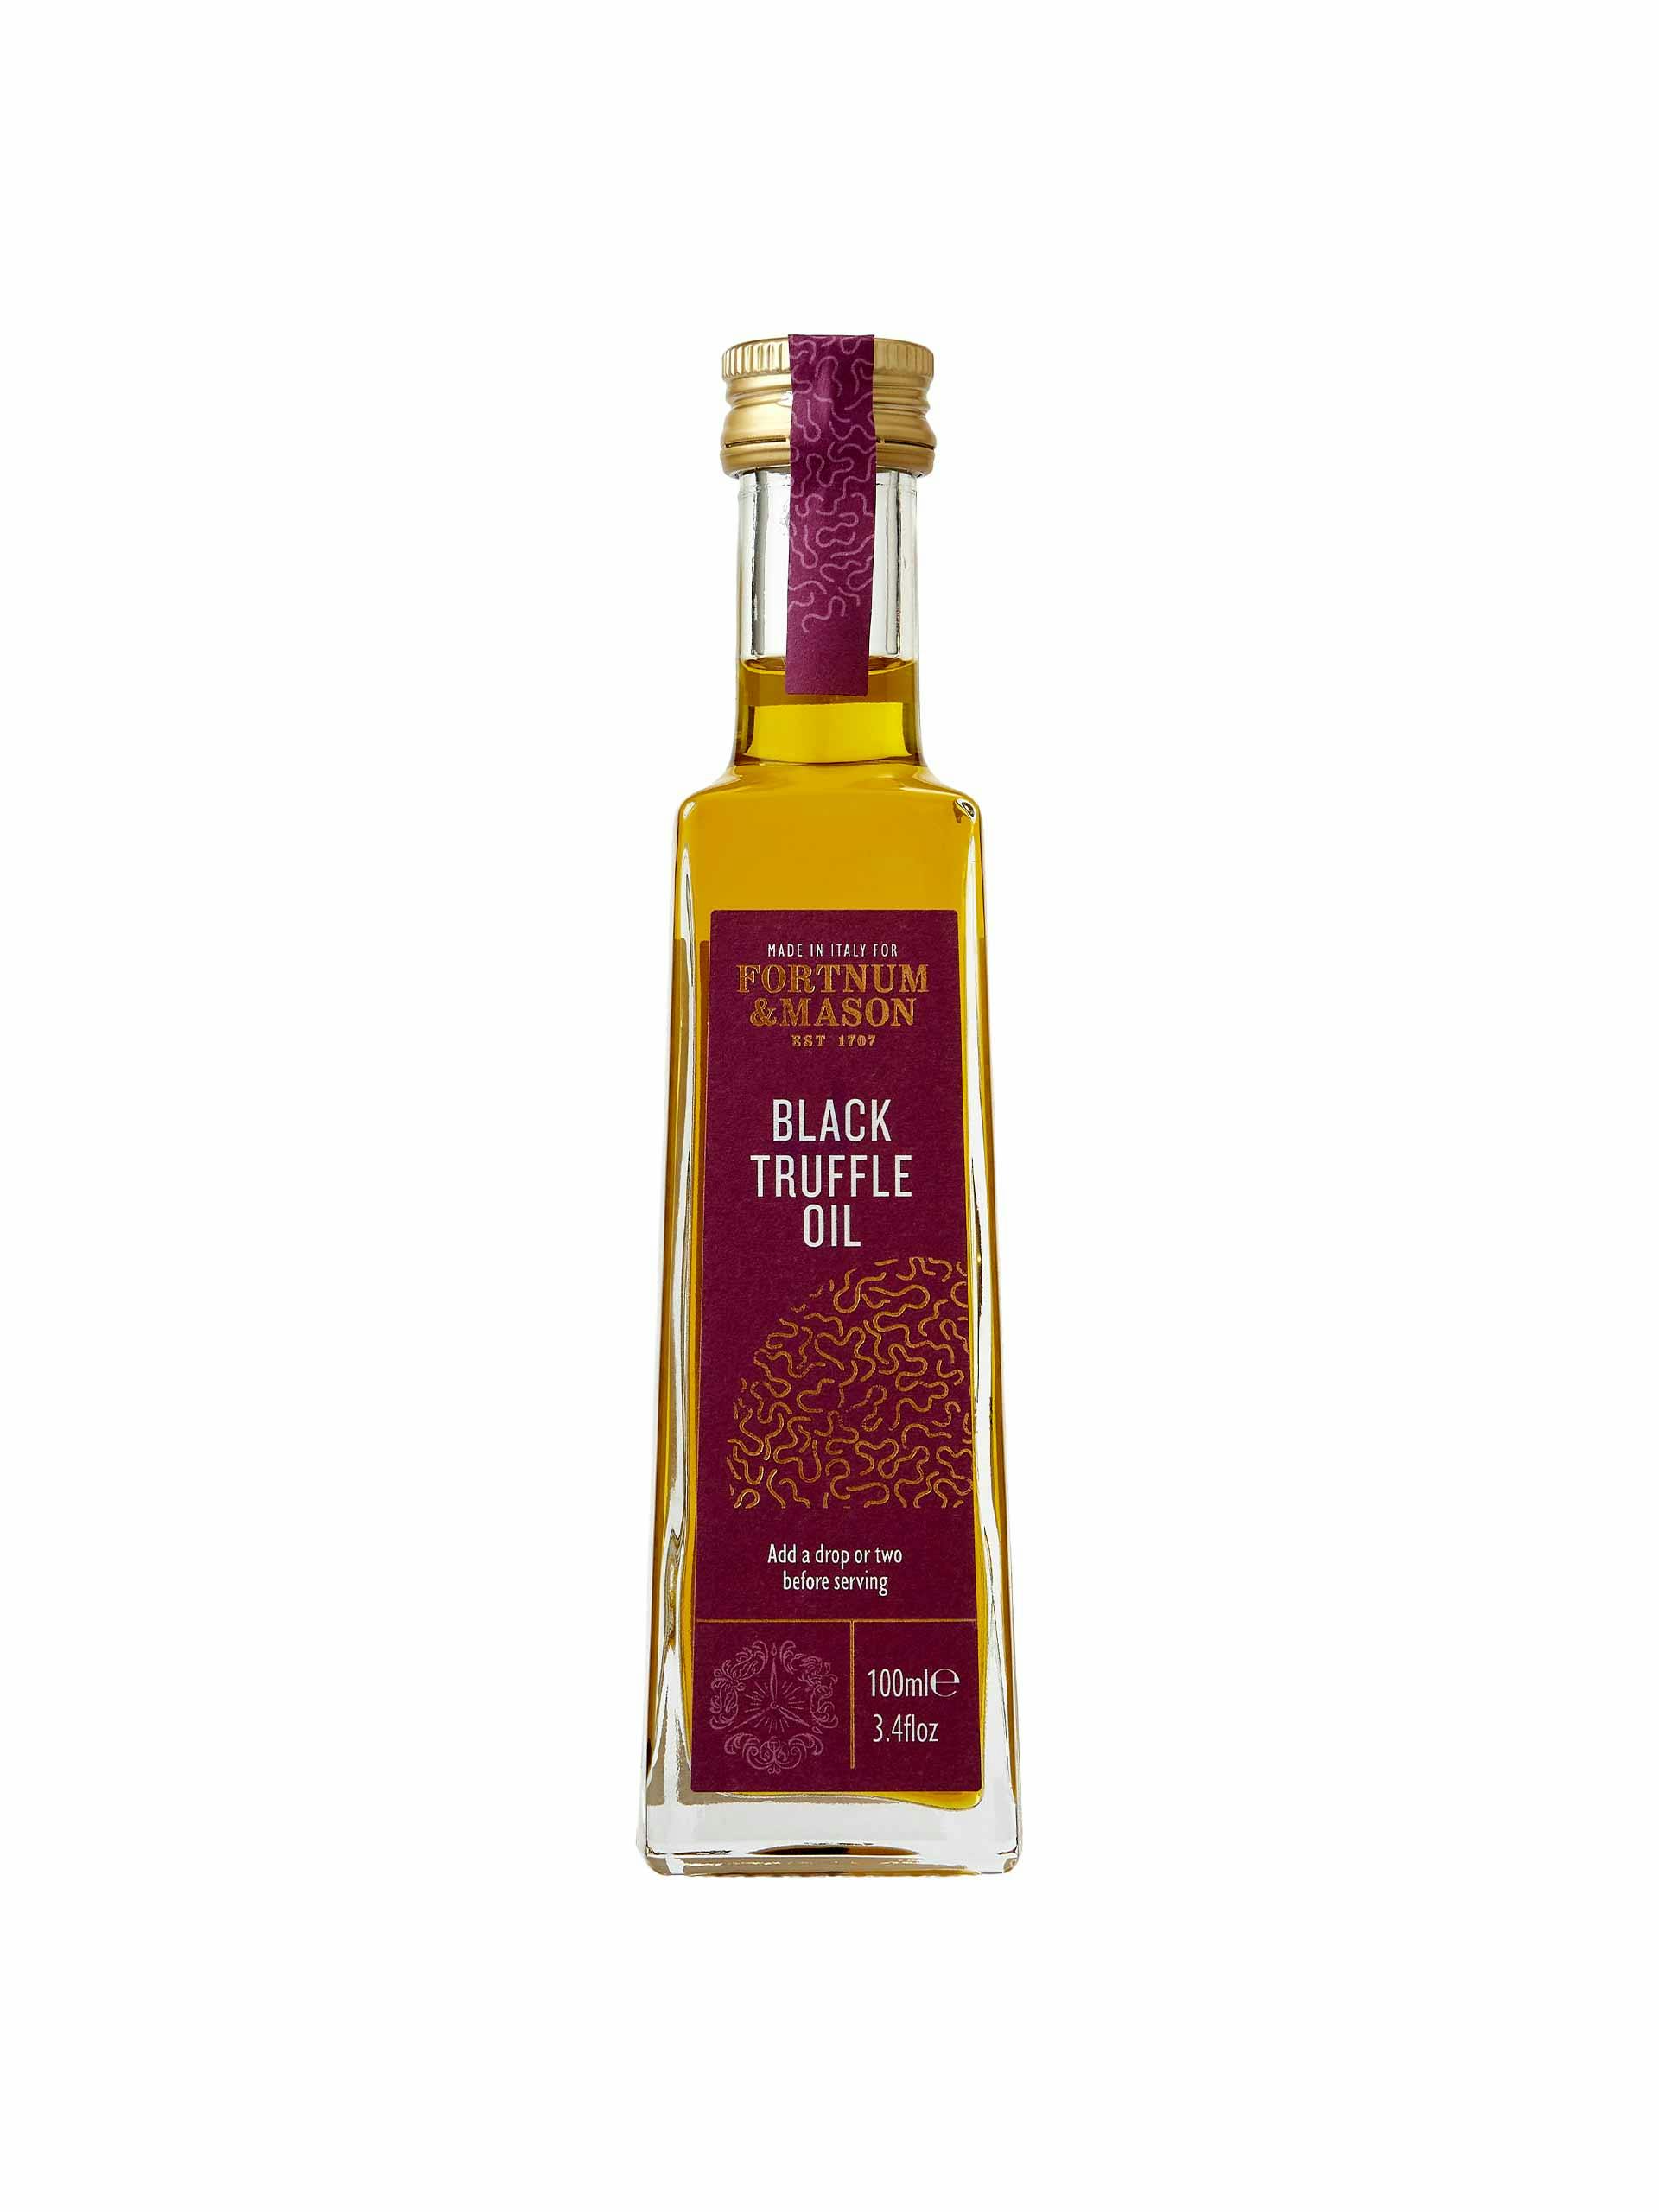 Black winter truffle oil